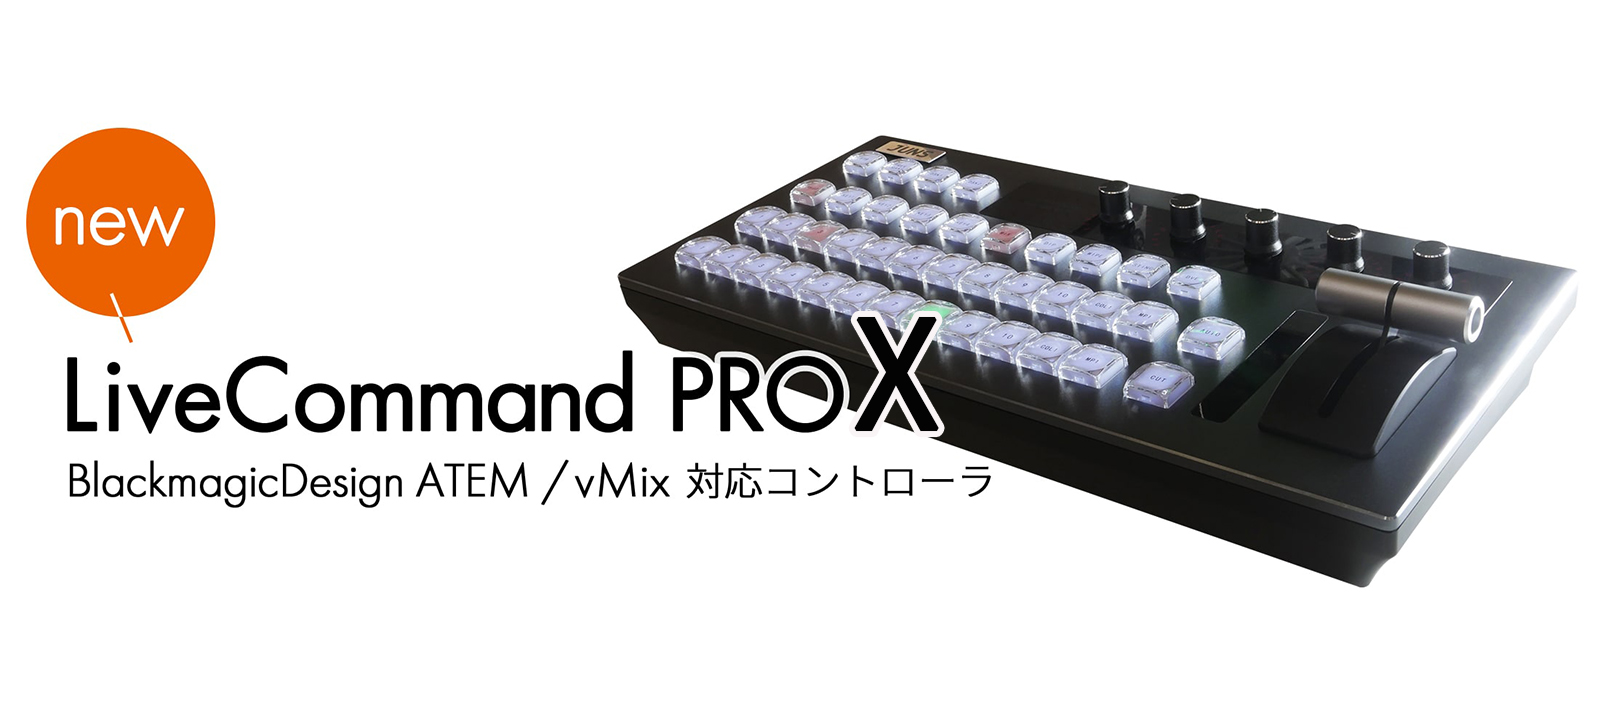 ATEM/vMix用コントローラー LiveCommand PROX